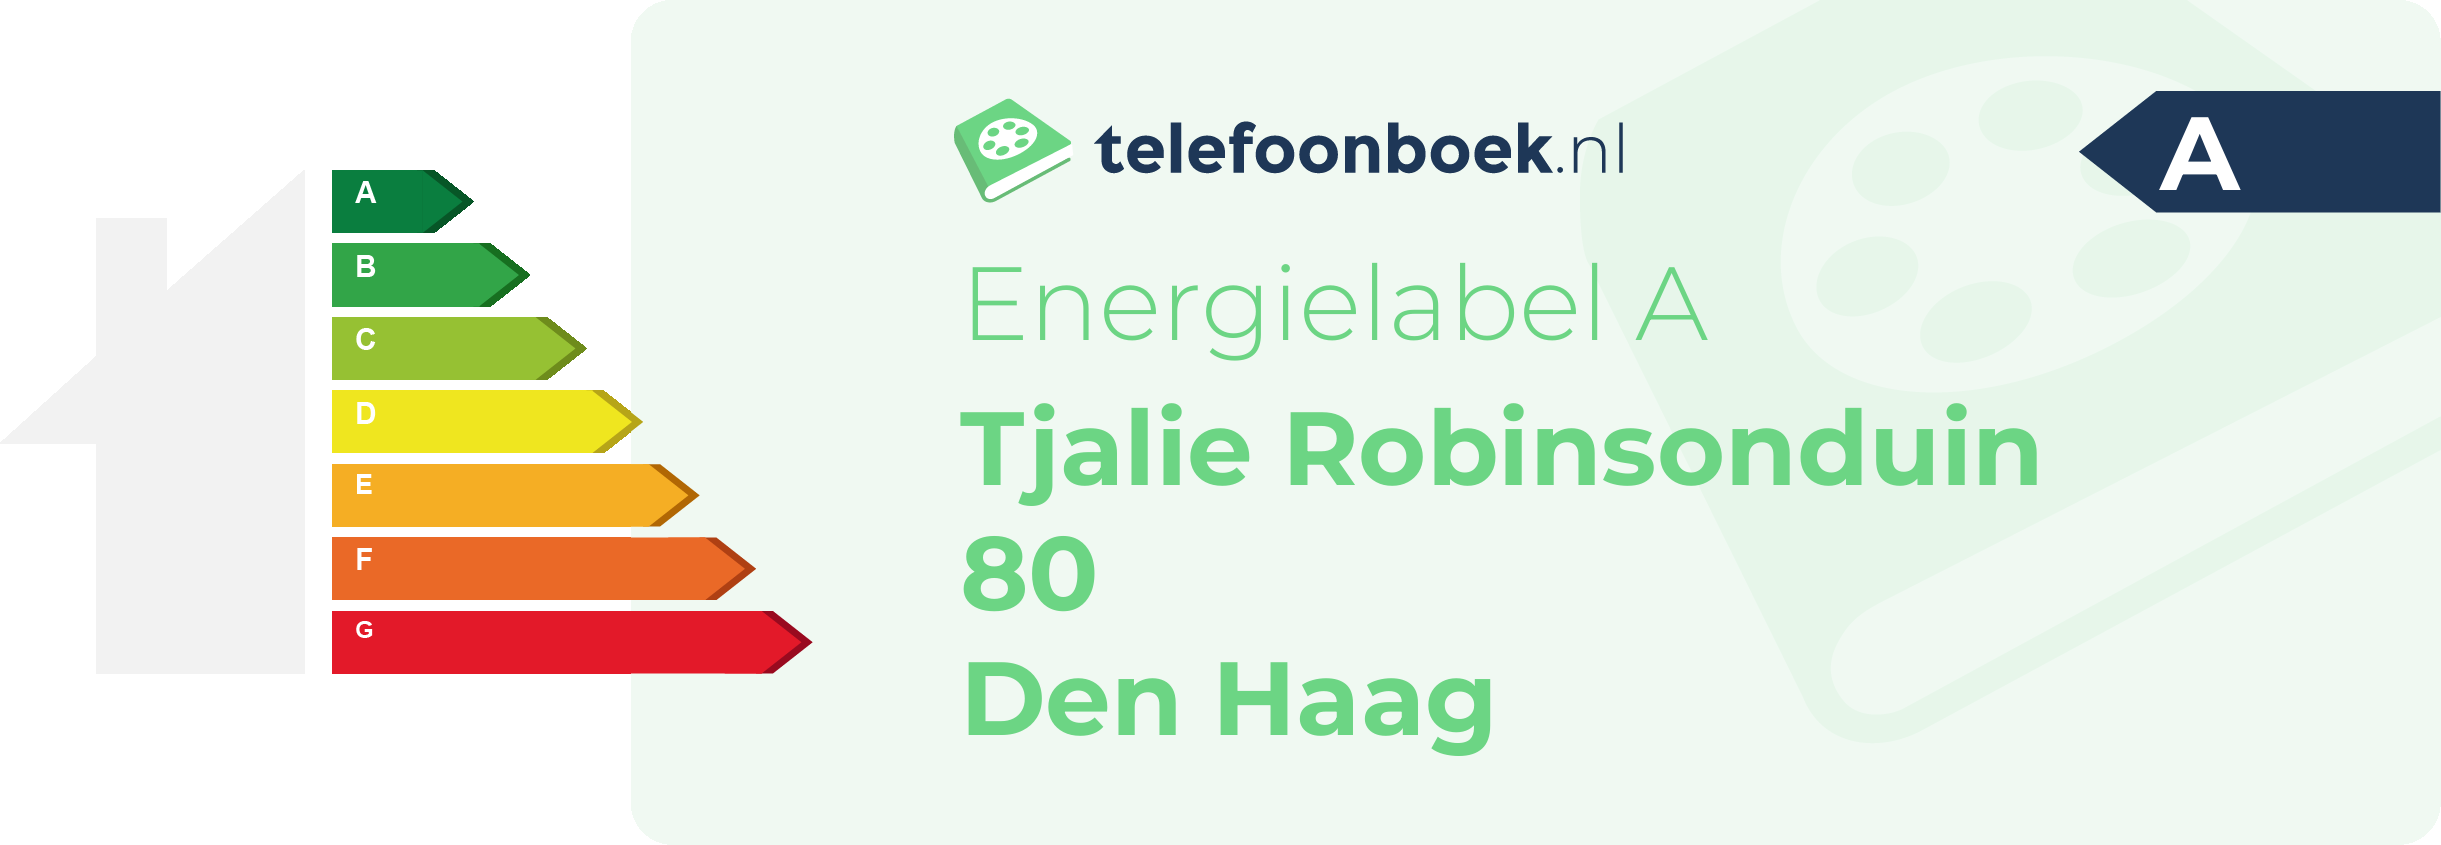 Energielabel Tjalie Robinsonduin 80 Den Haag